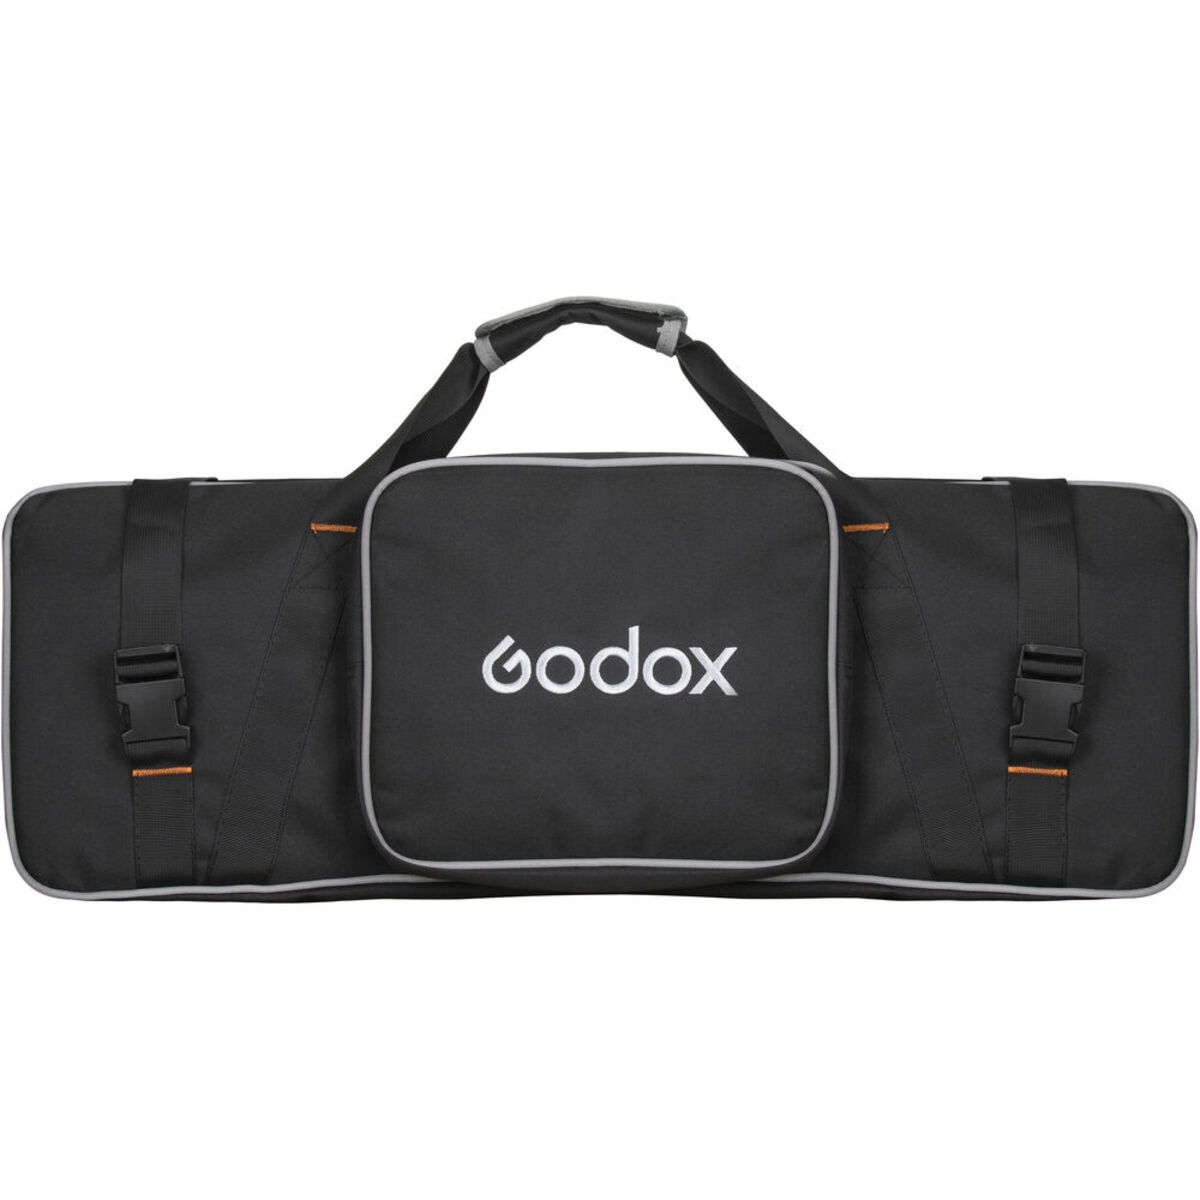 Godox Litemons LA200D Daylight Duo Kit